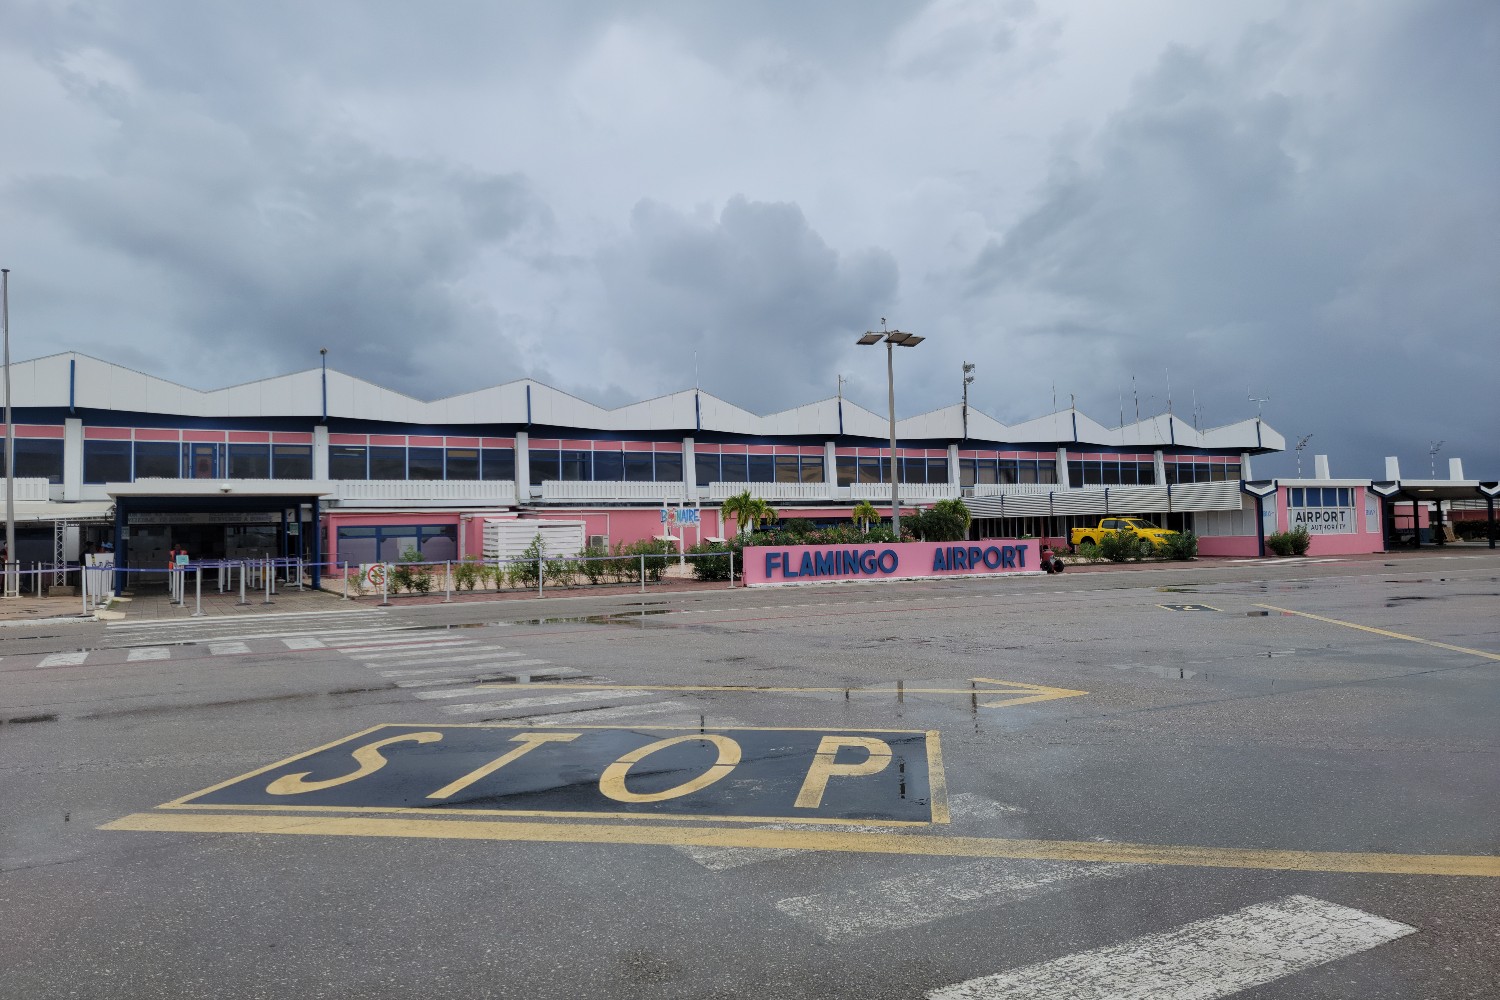 The runway at Flamingo - Bonaire International Airport.